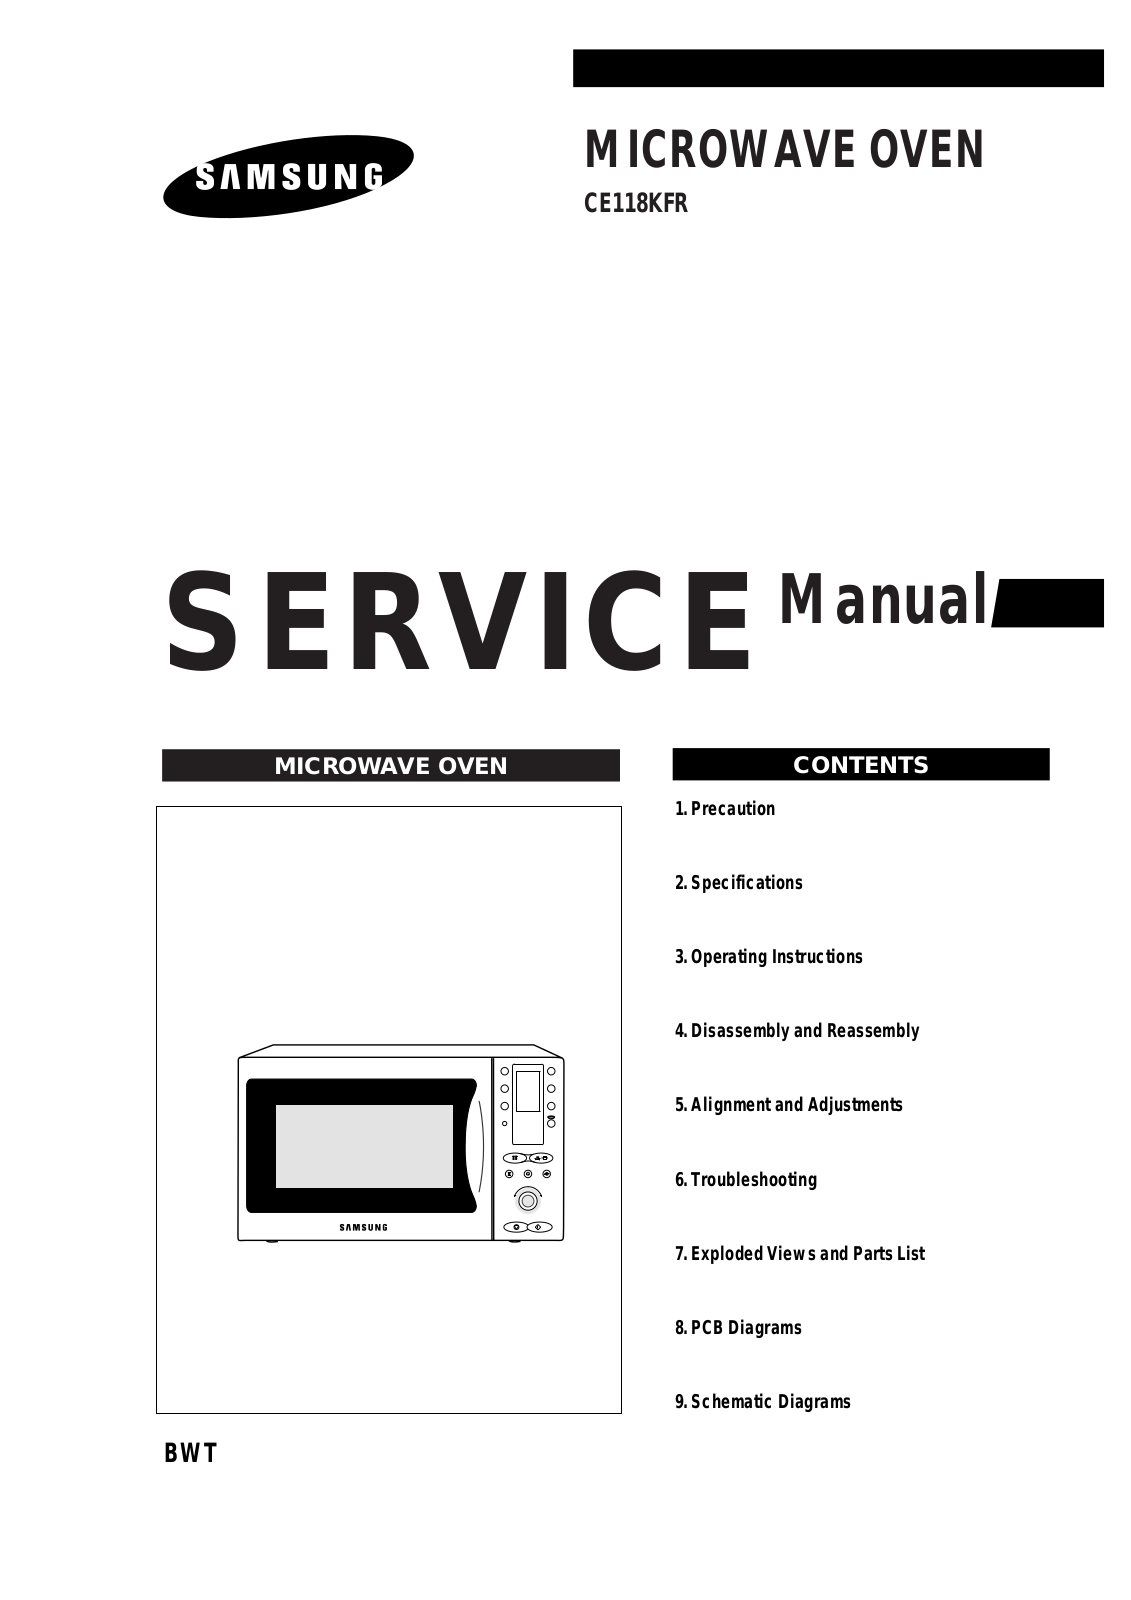 Samsung CE118, CE118KFR-SBTW Service Manual